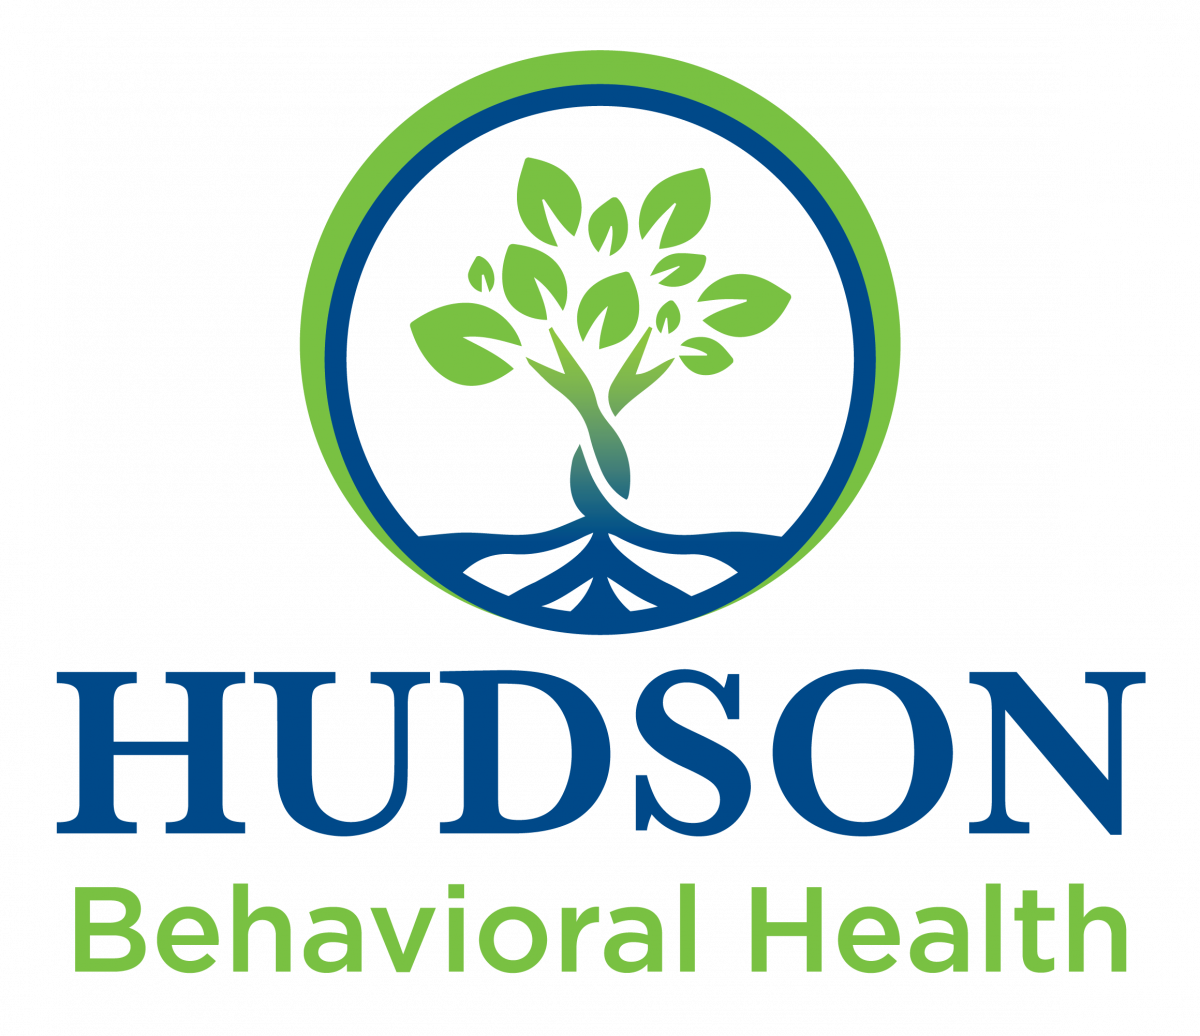 Hudson Behavioral Health